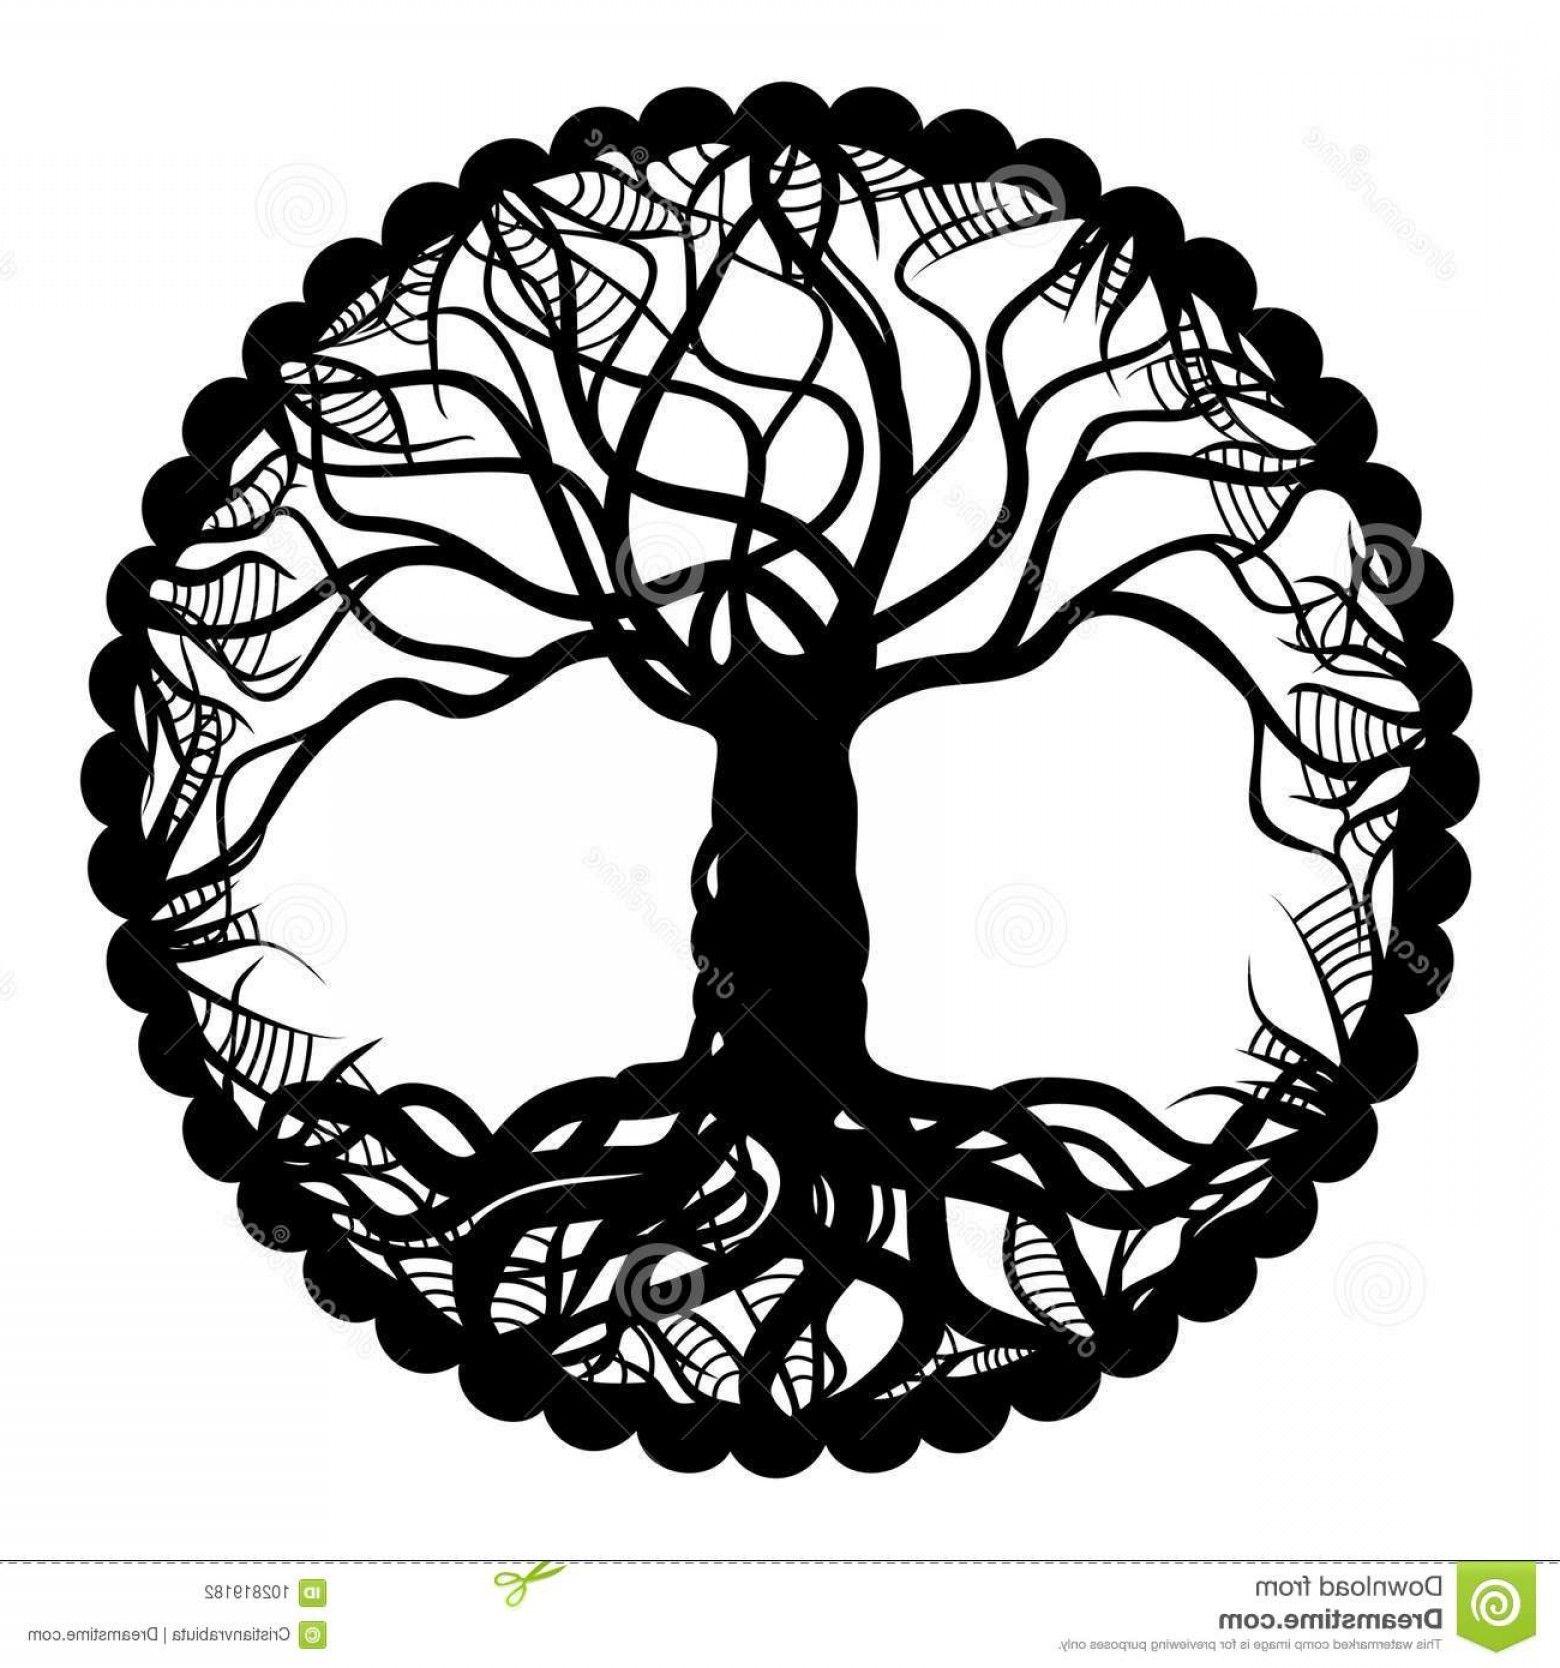 Black and White Tree in Circle Logo - Black White Tree Life Medallion Illustration Image | SOIDERGI